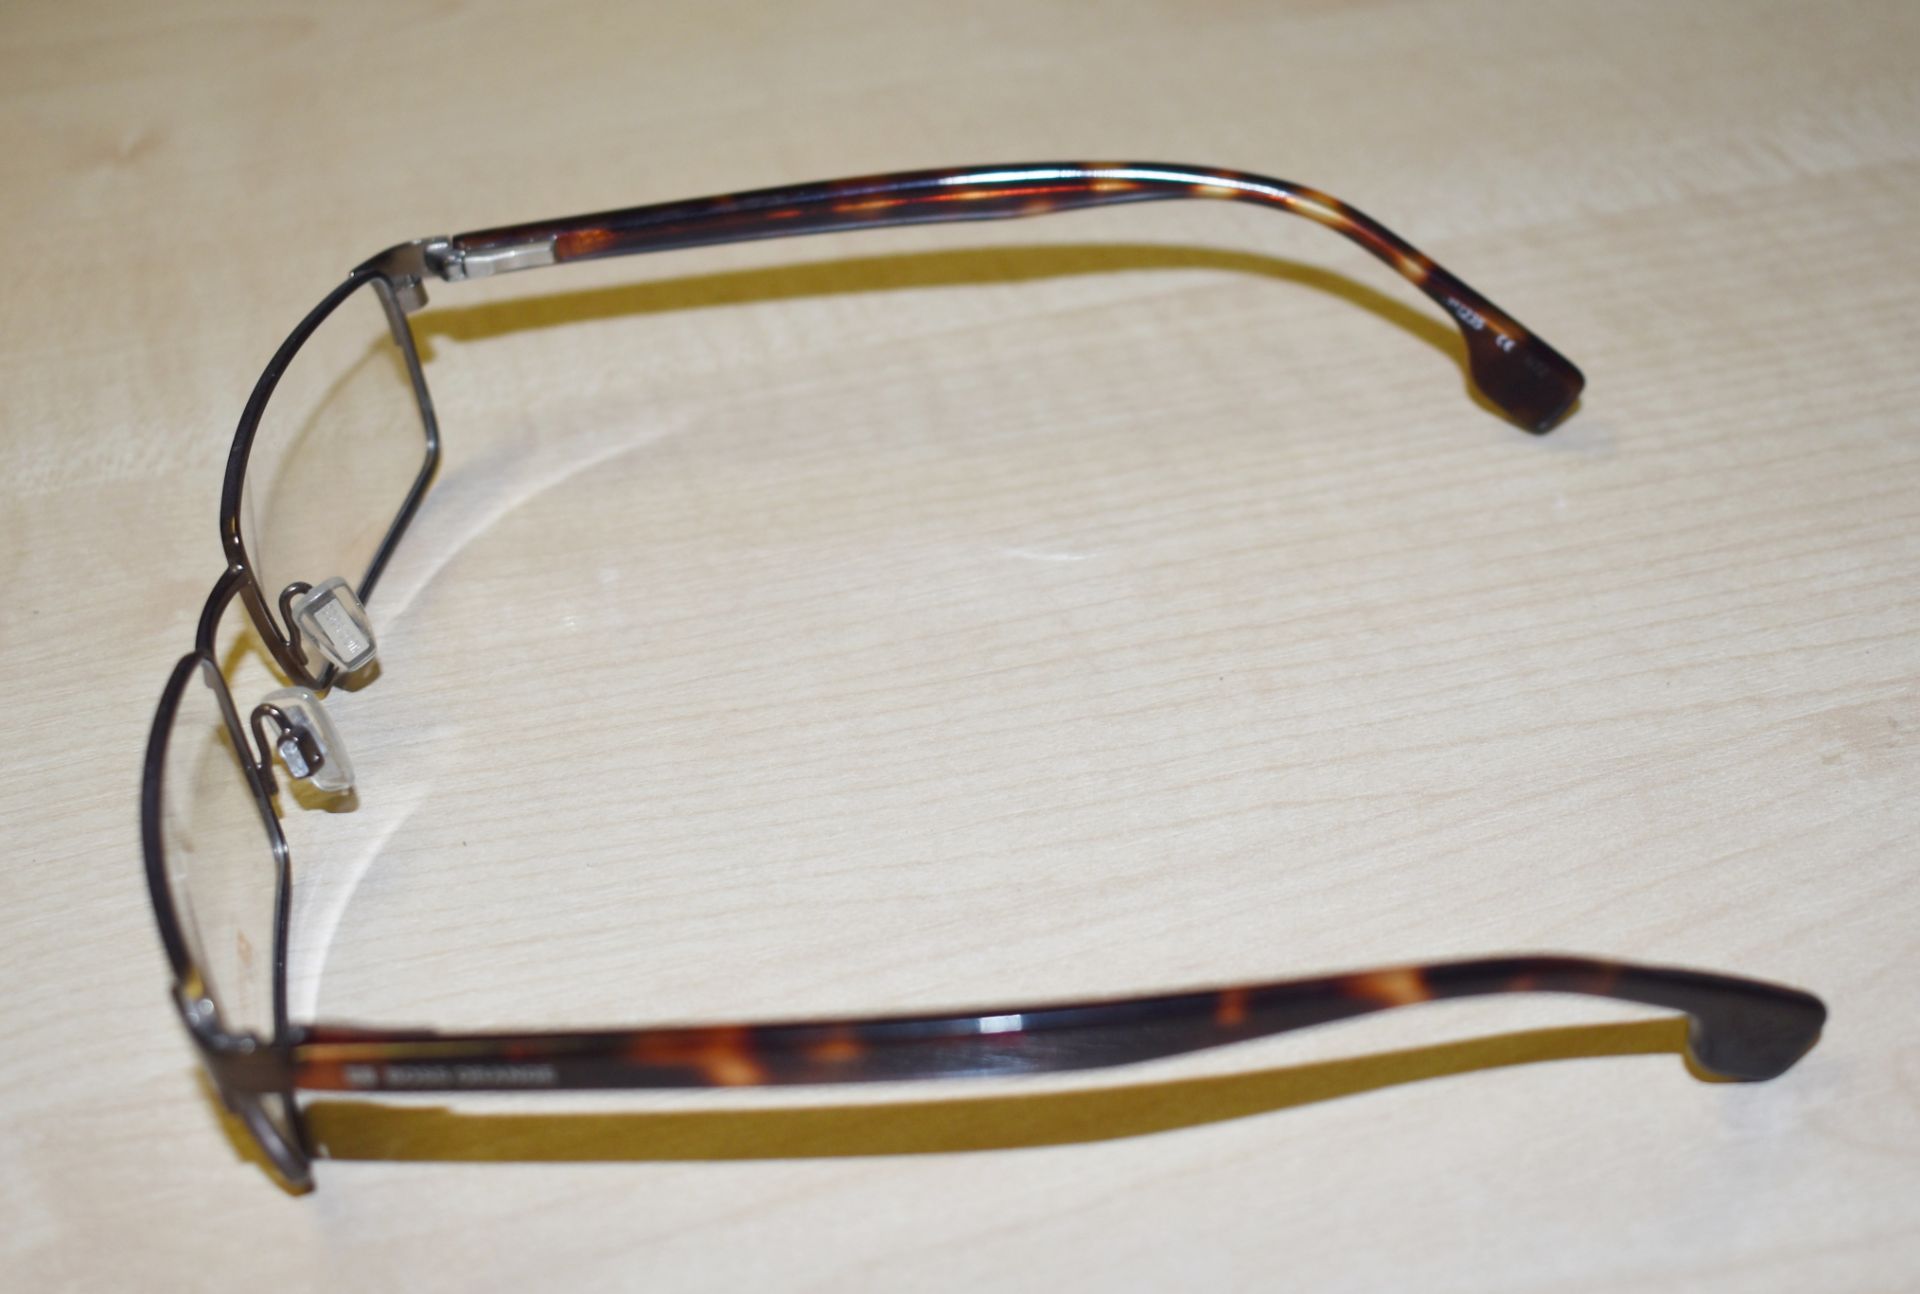 1 x Genuine BOSS ORANGE Spectacle Eye Glasses Frame - Ex Display Stock  - Ref: GTI193 - CL645 - - Image 8 of 11